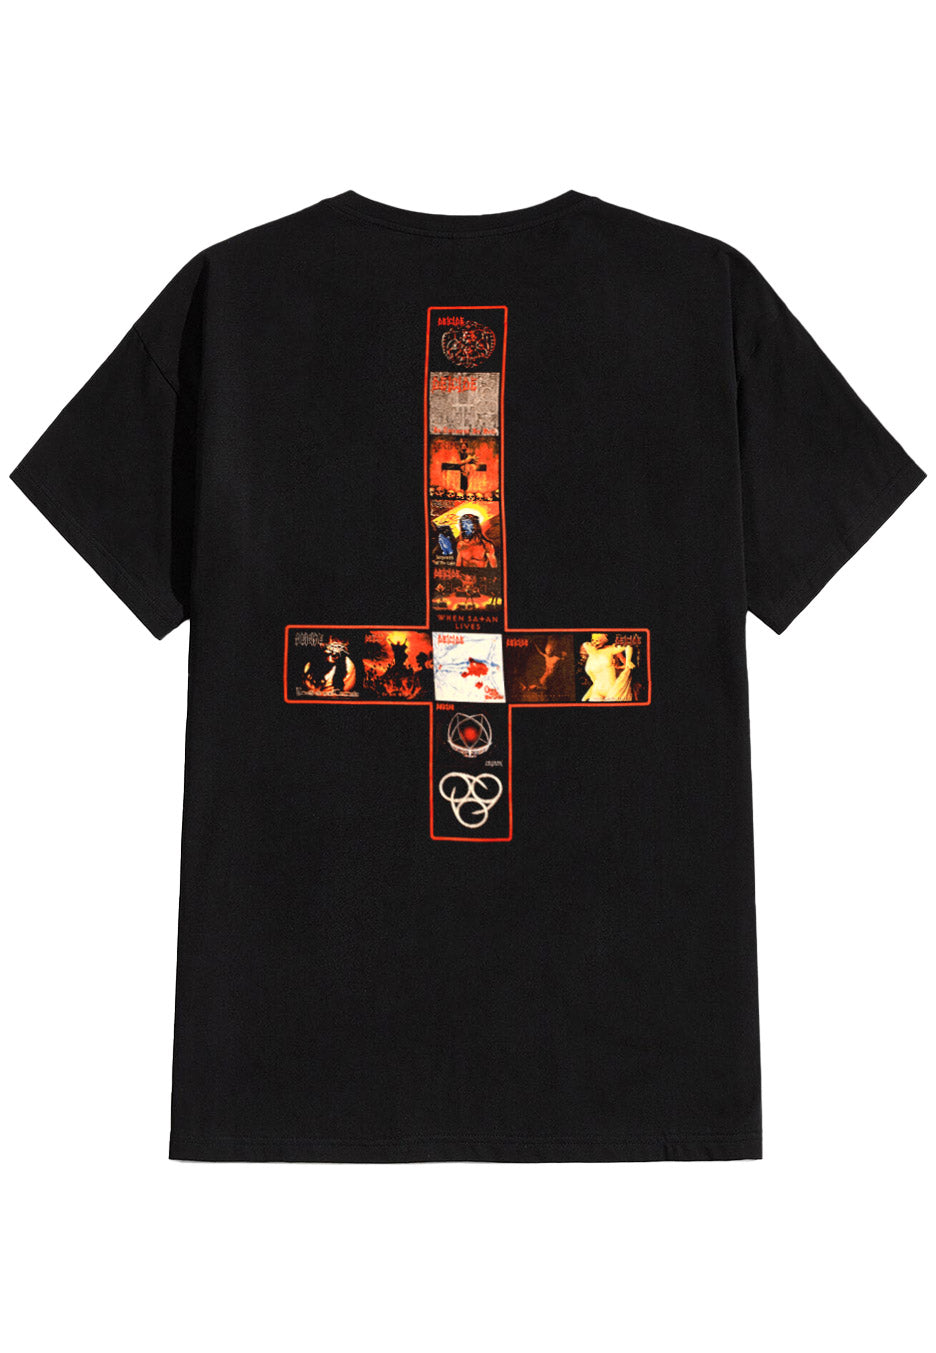 Deicide - 30 Years Of Blasphemy - T-Shirt